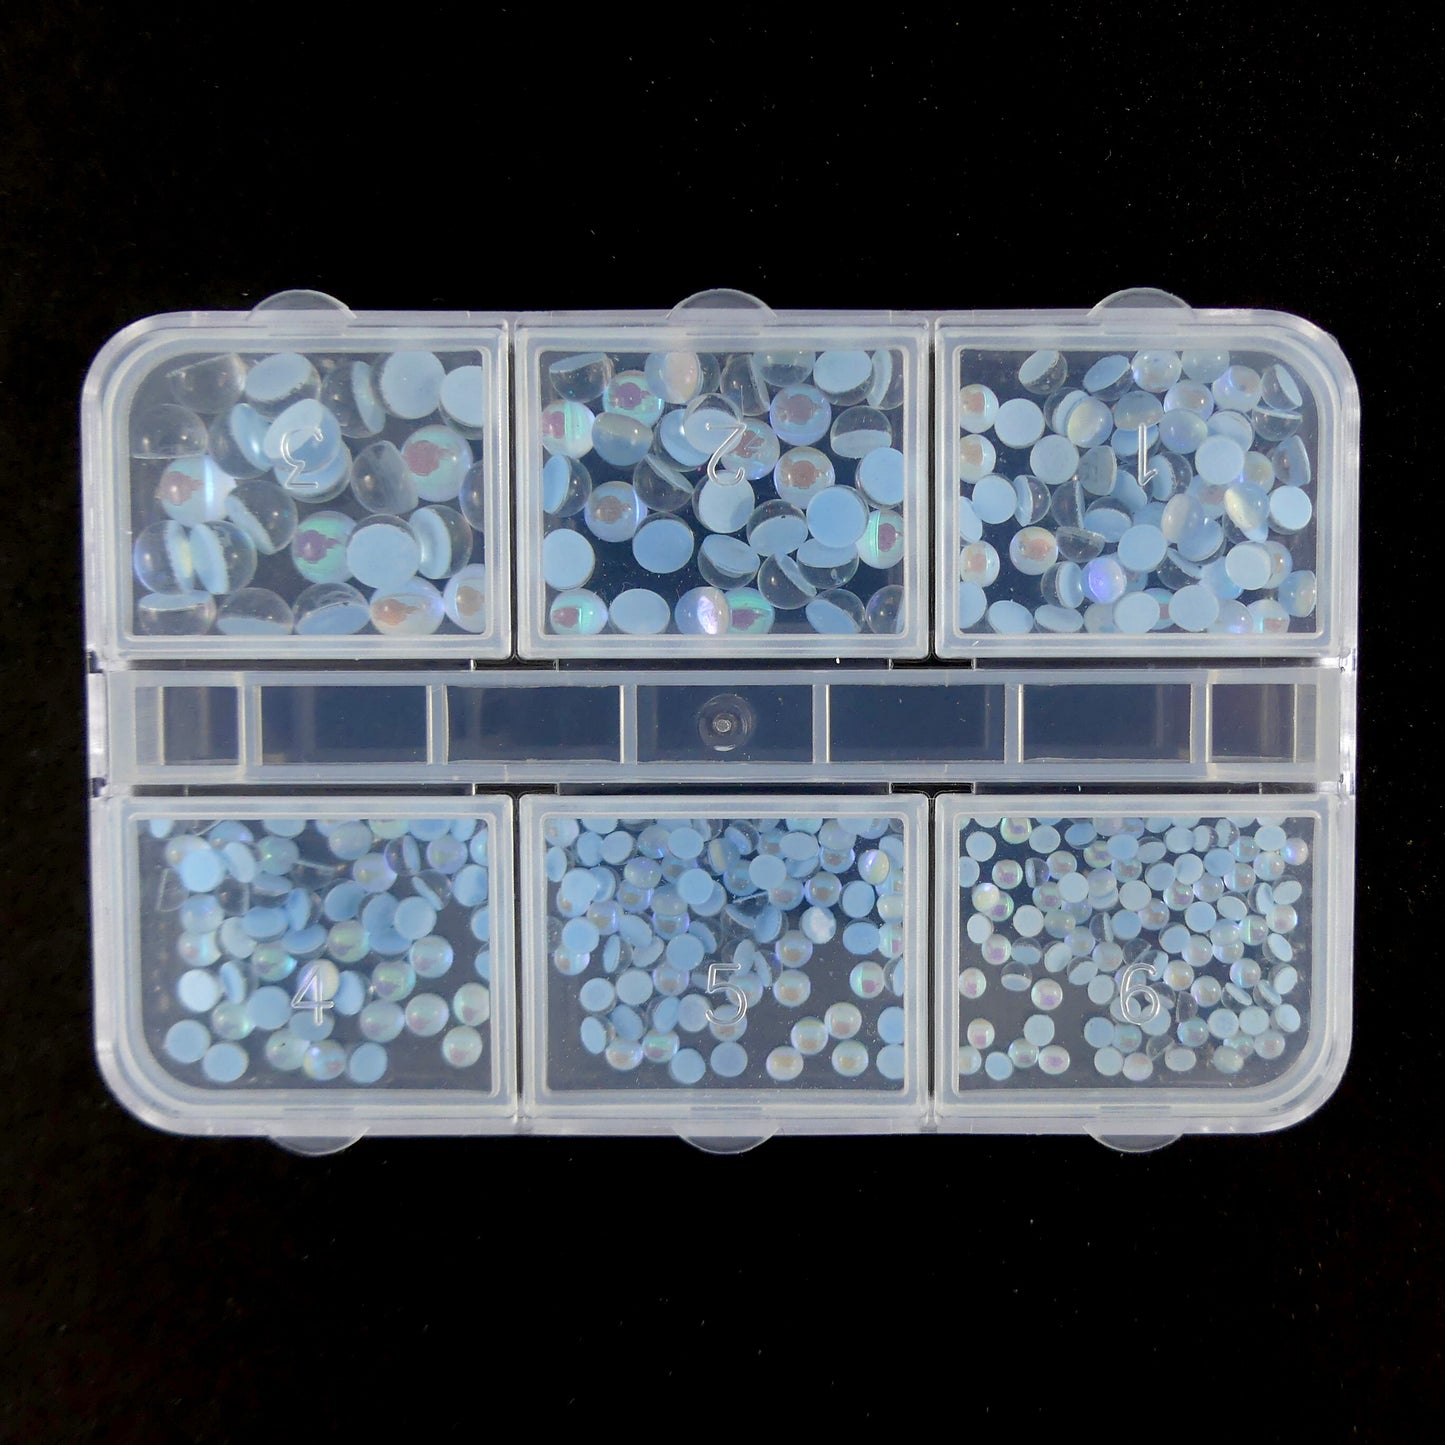 Load image into Gallery viewer, Rain Drop Half Pearls Set - Light Blue
